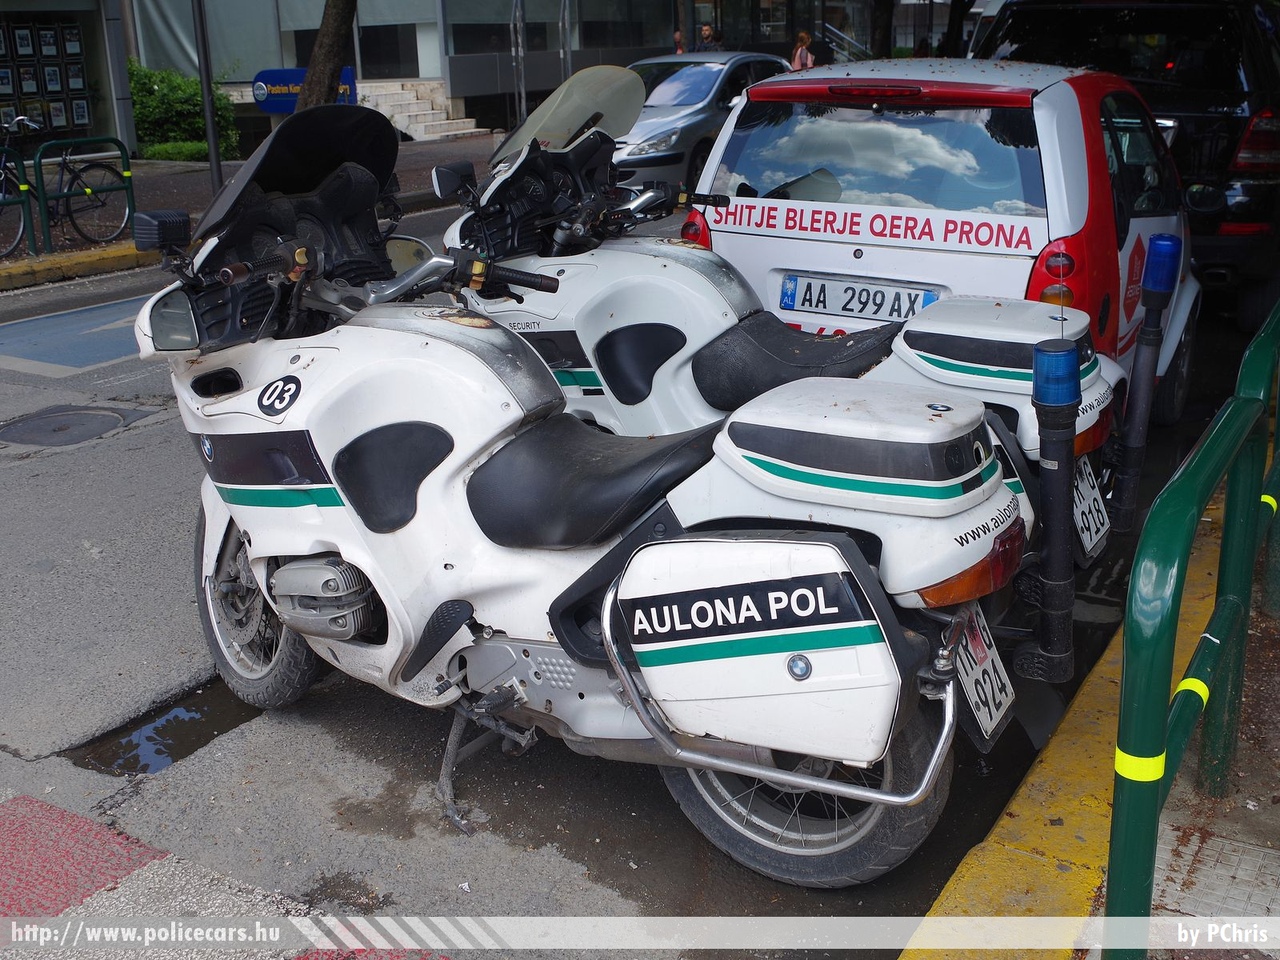 BMW, fotó: PChris
Keywords: albán Albánia motor police bike albanian